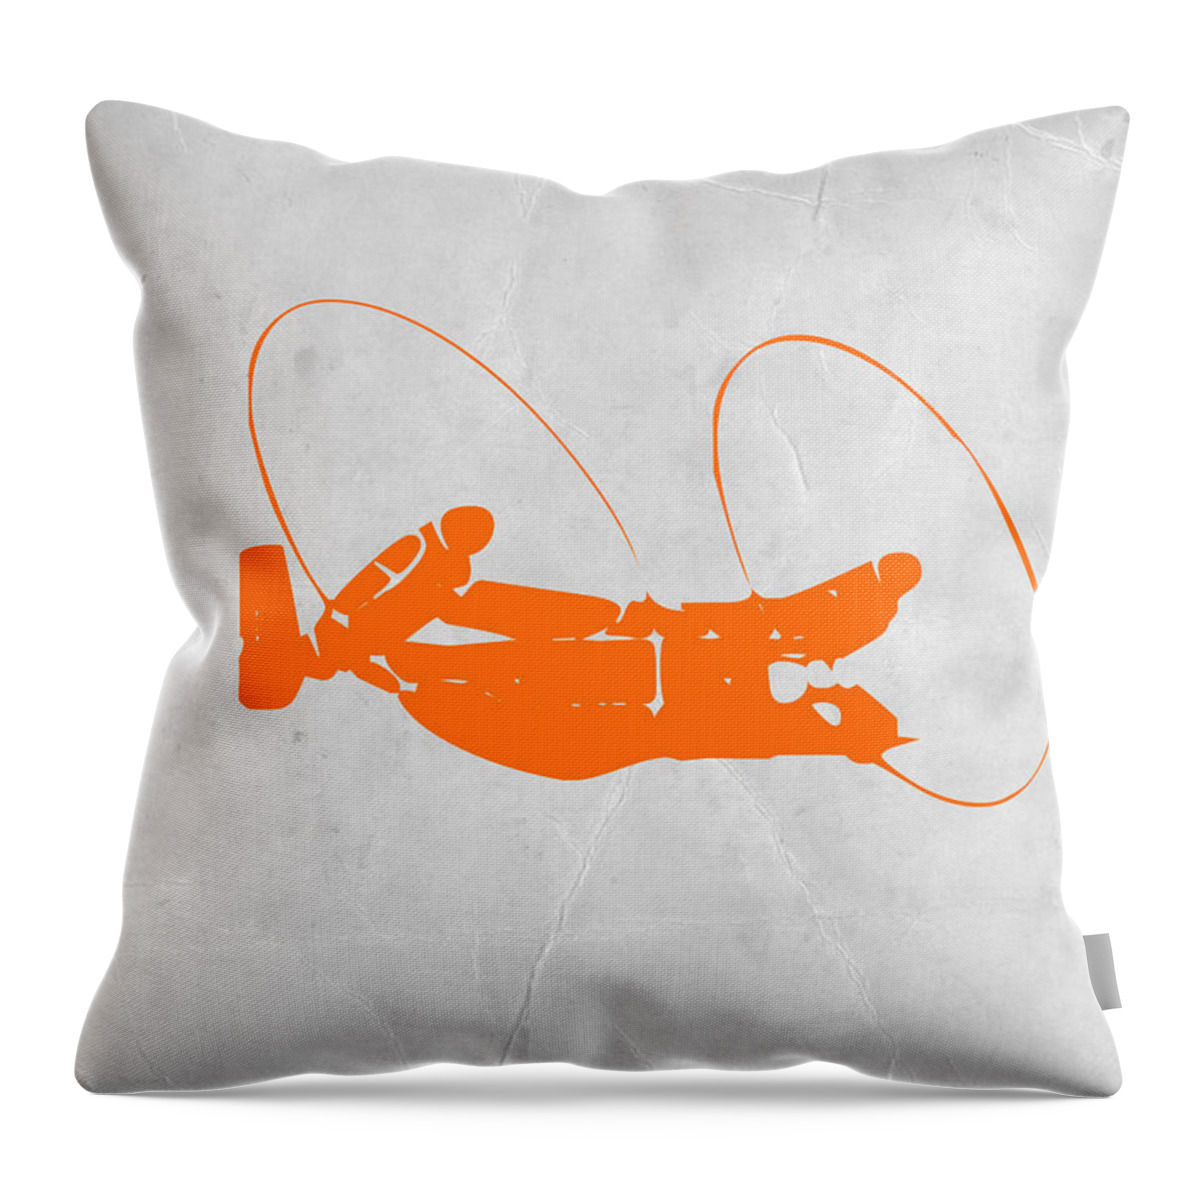 Plane Throw Pillow featuring the photograph Orange Plane by Naxart Studio